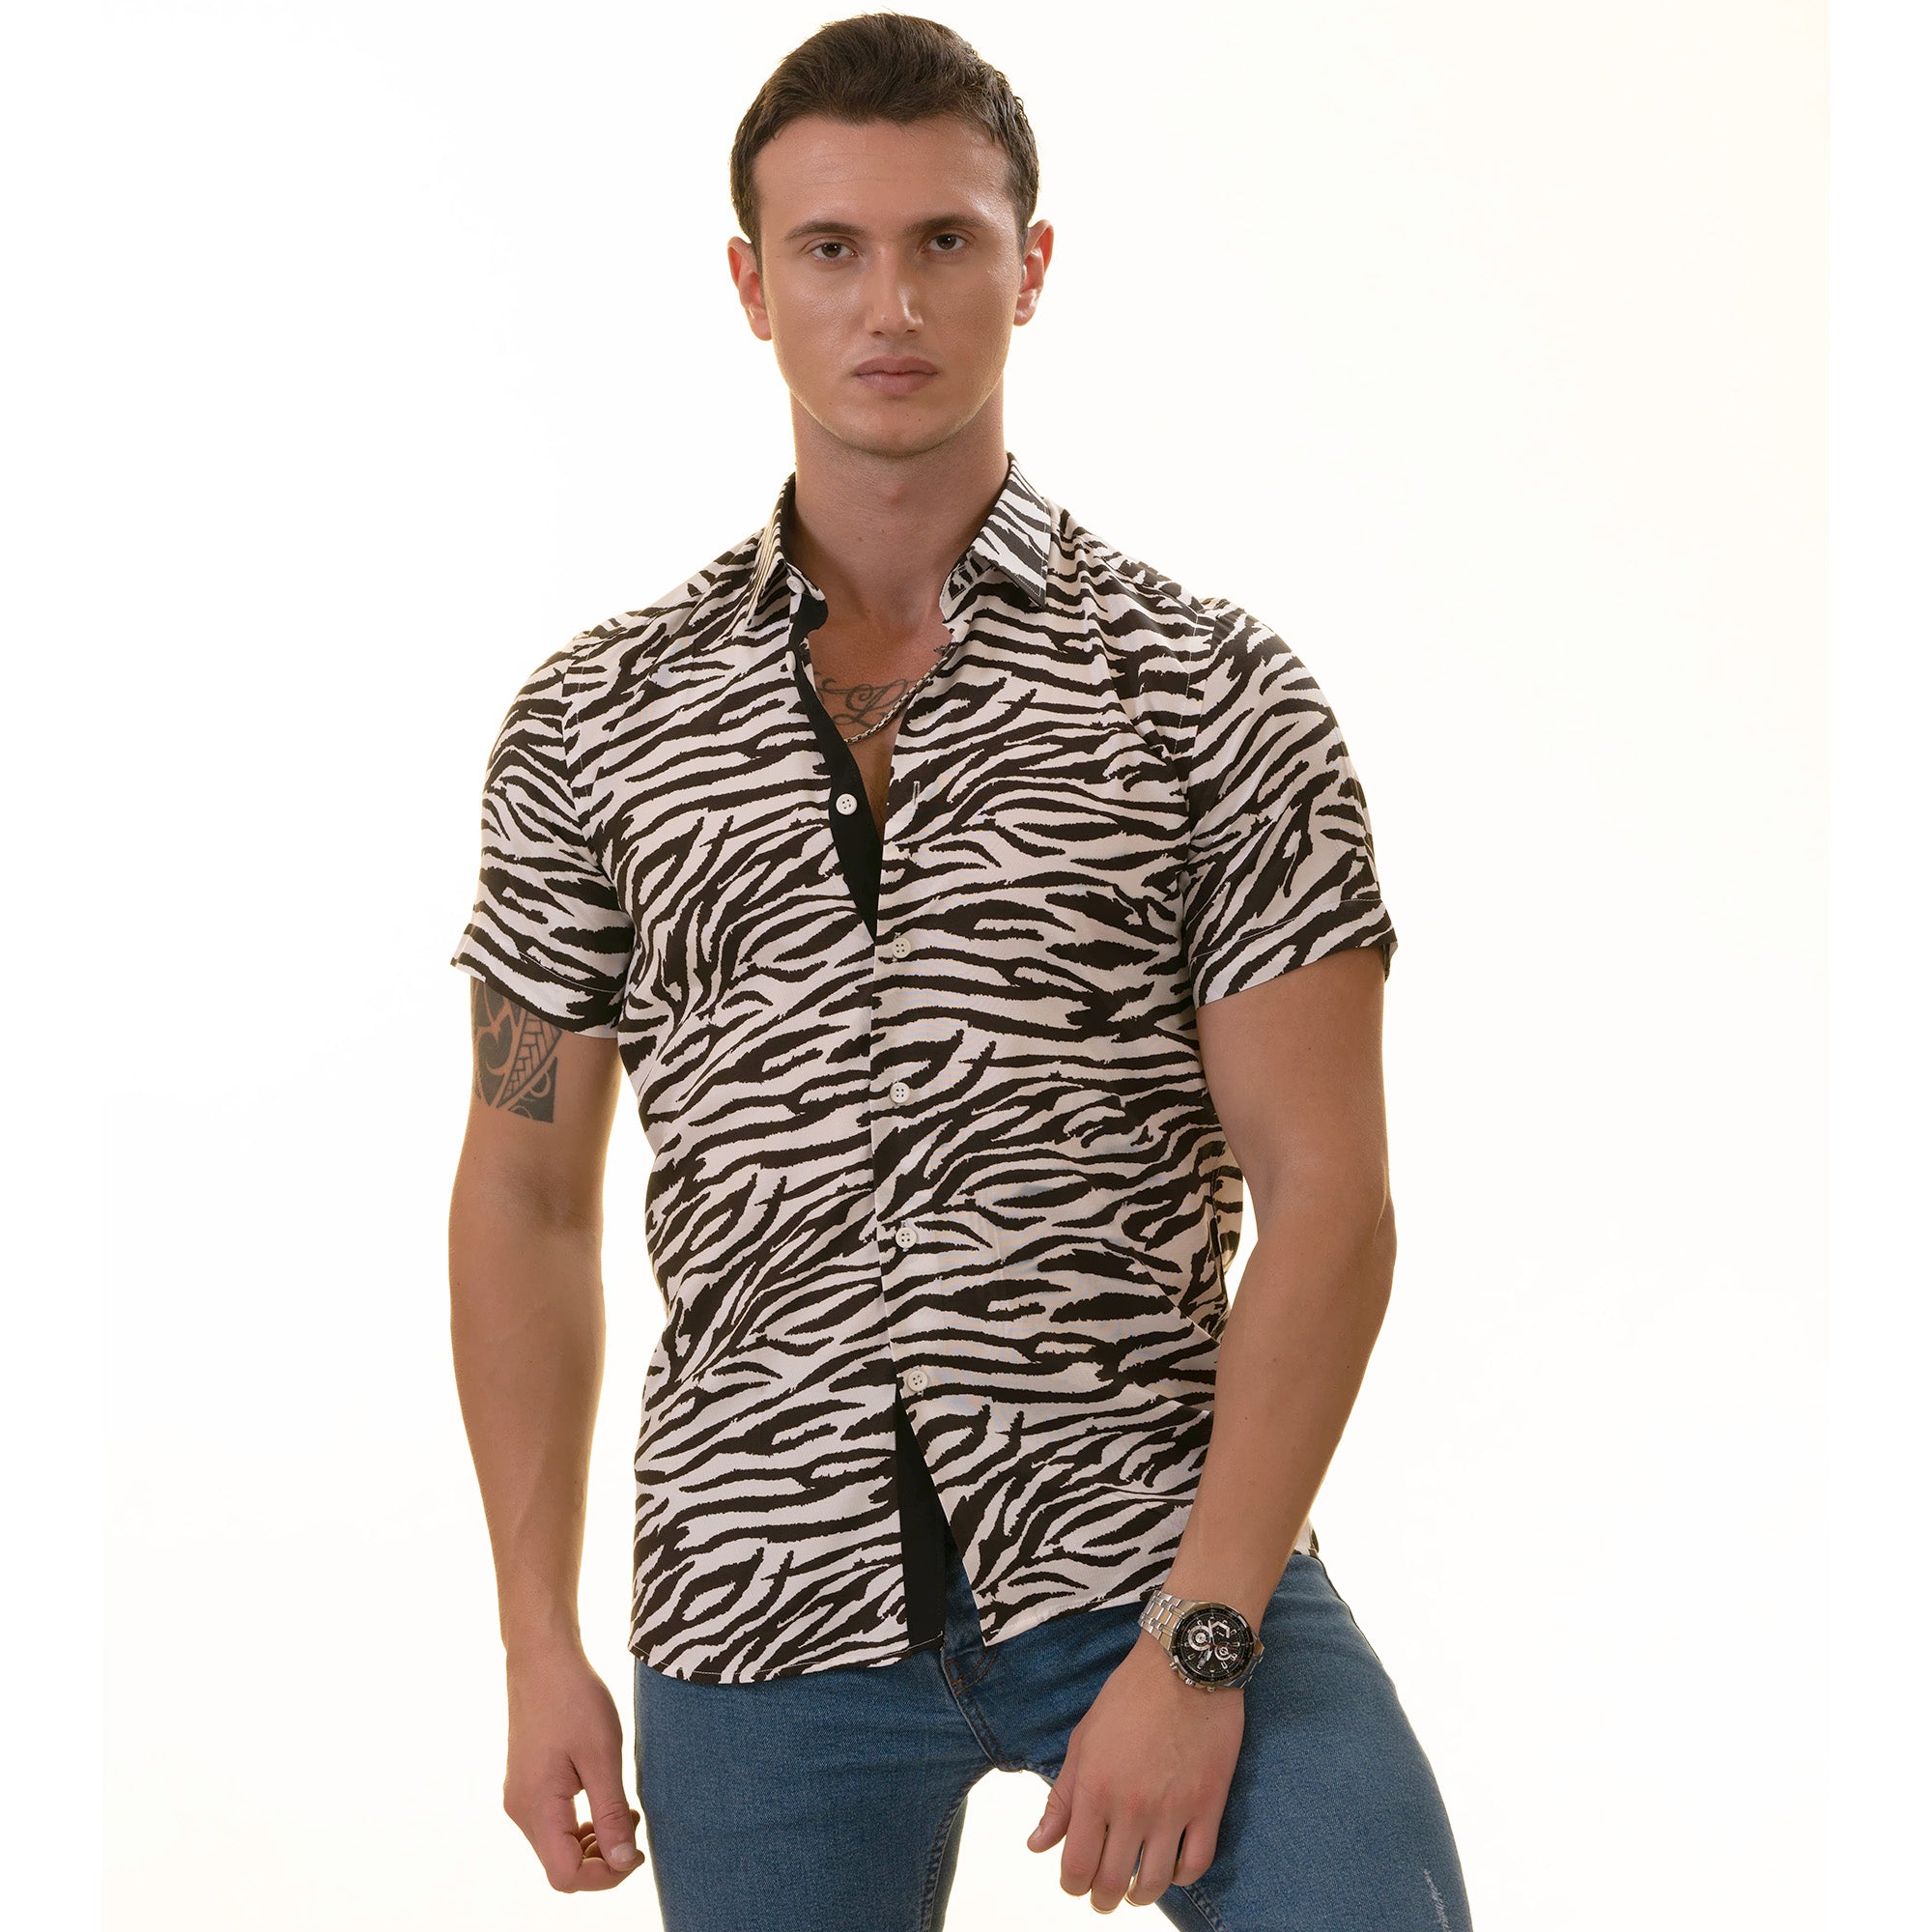 Black & White Zebra Shirt  Designer Paisley  Short Sleeve Button up Shirts - Tailored Slim Fit Cotton Dress Shirts